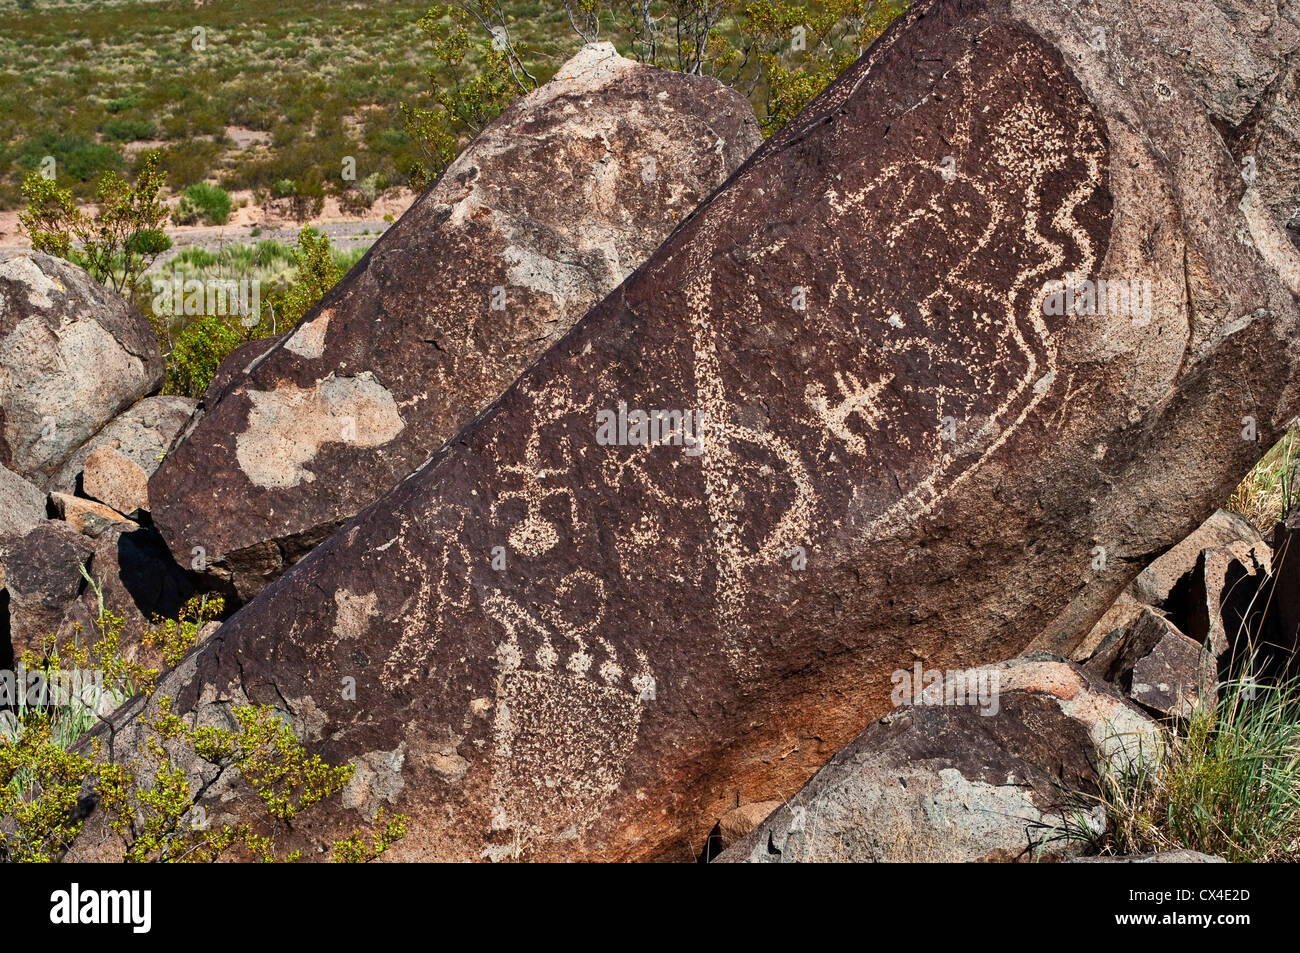 Jornada Mogollon style rock art at Three Rivers Petroglyph Site, Chihuahuan Desert near Sierra Blanca, New Mexico, USA Stock Photo